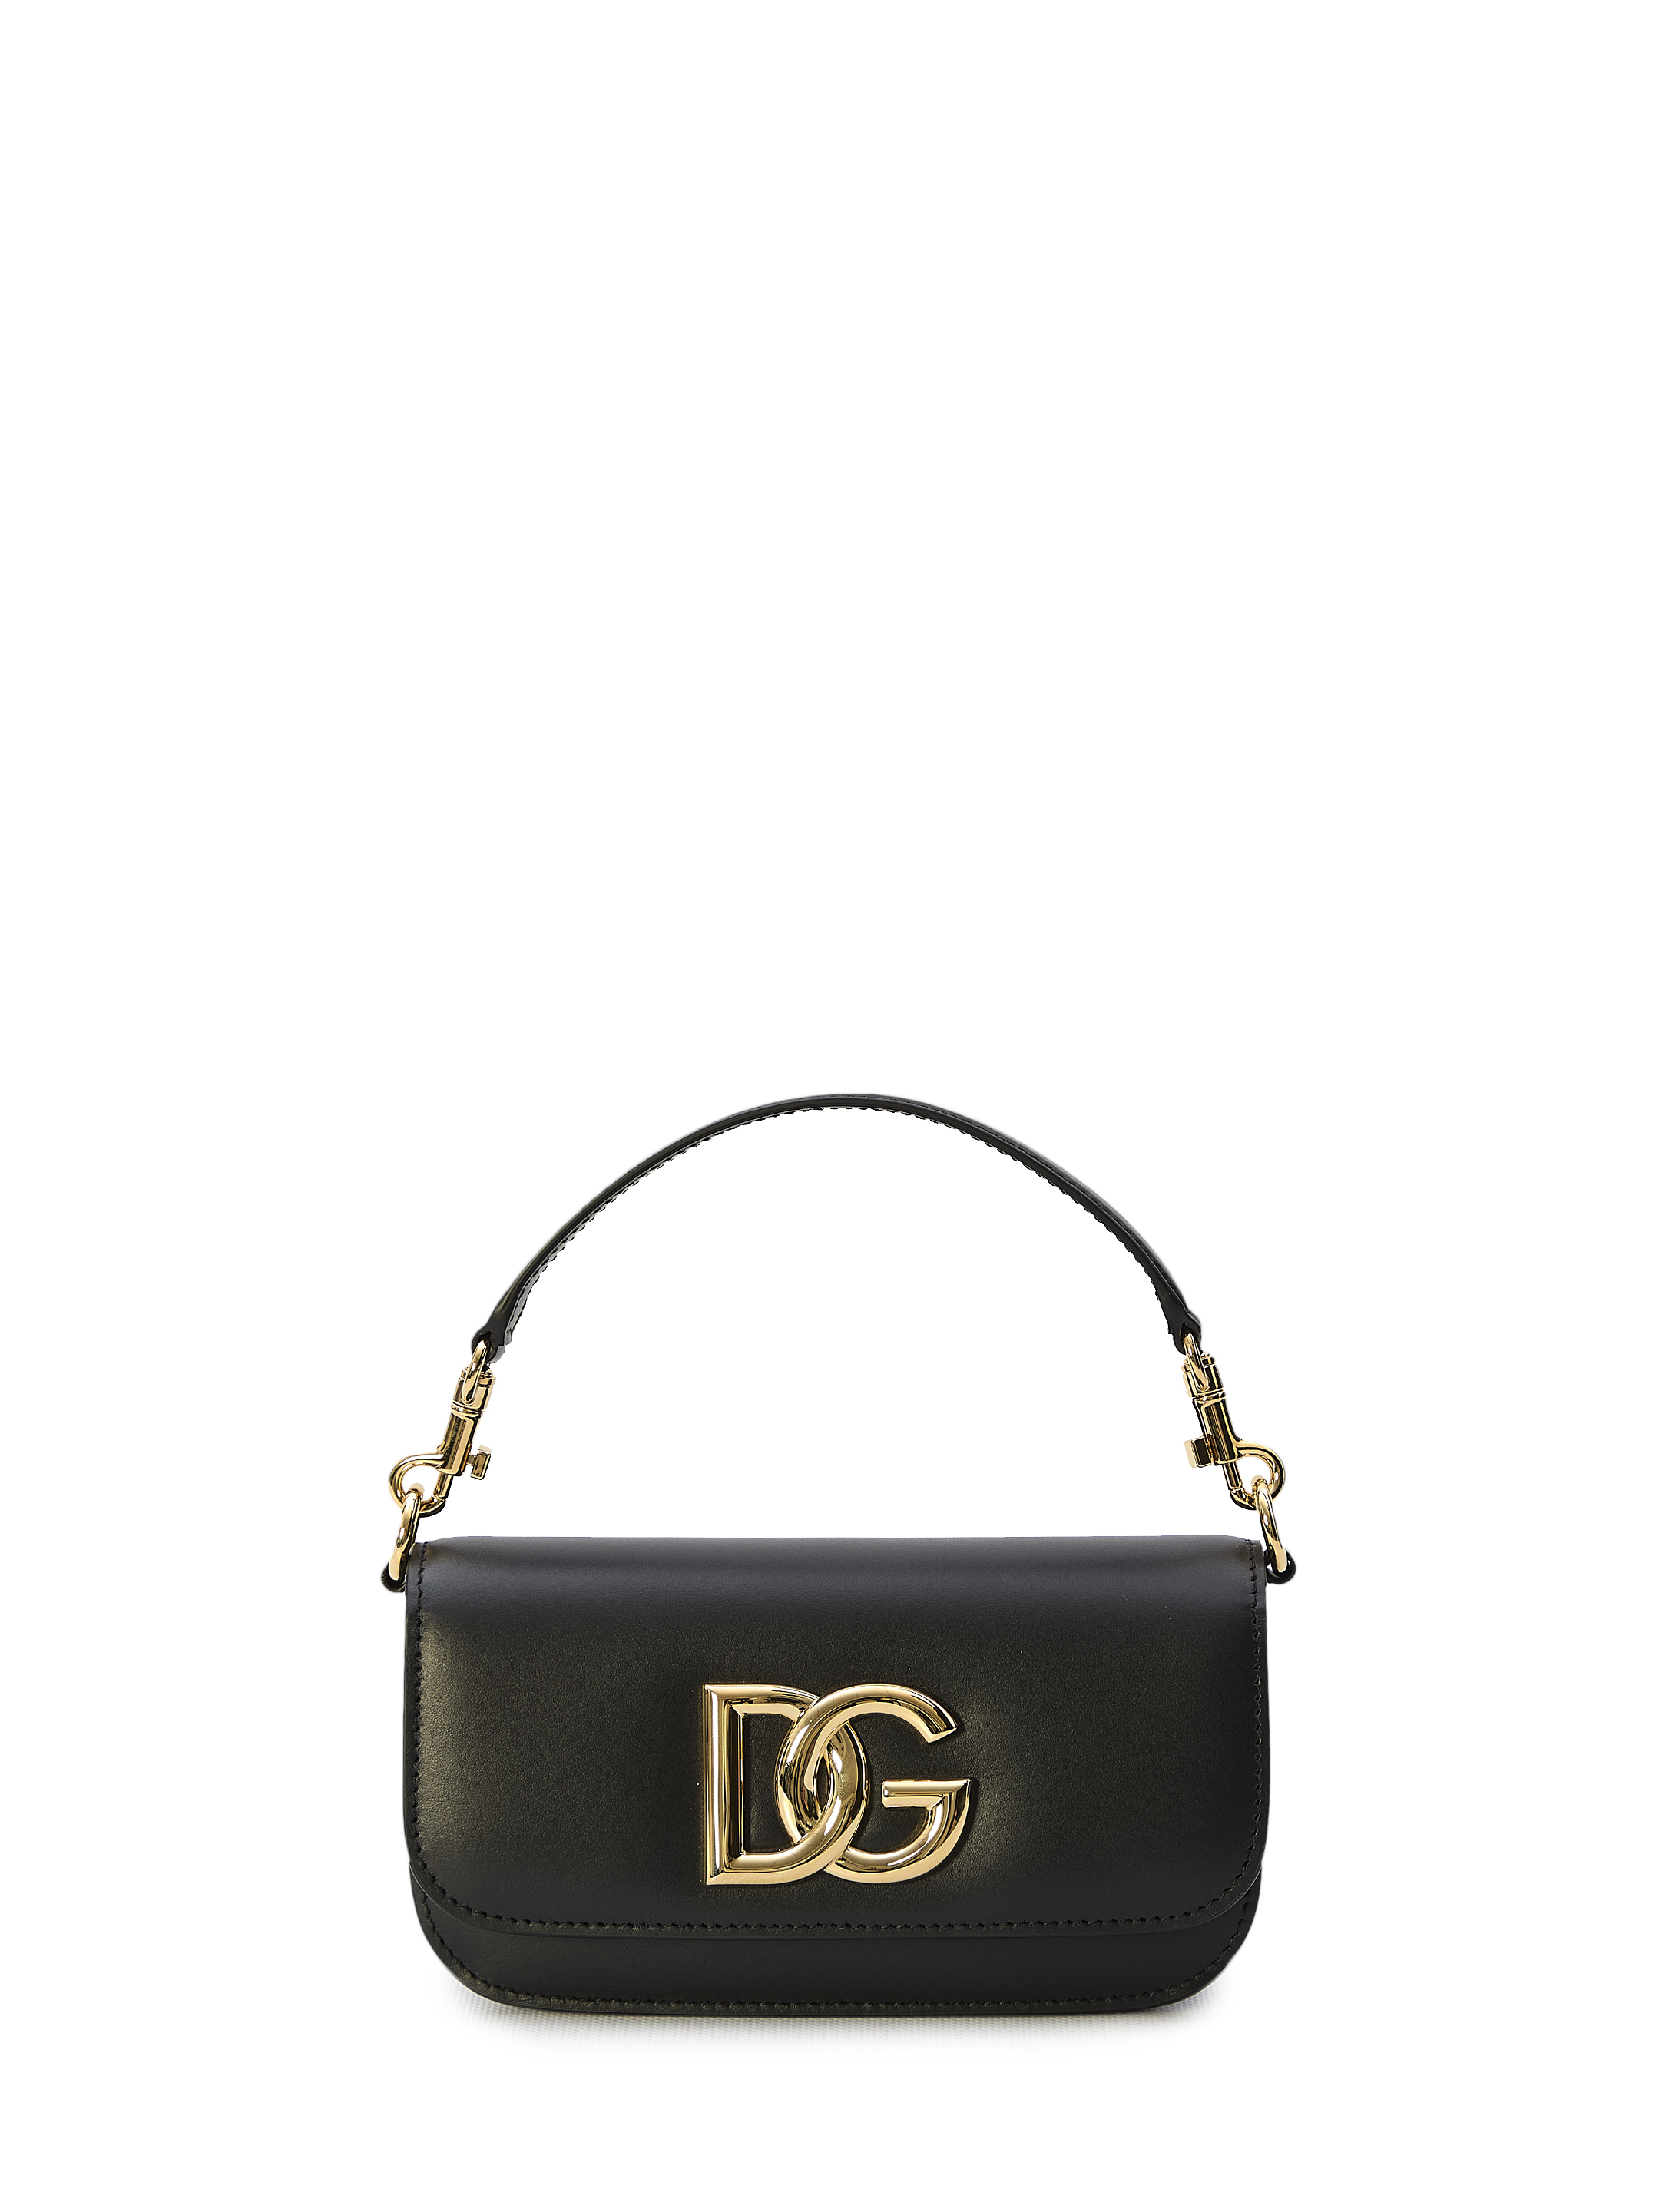 DOLCE&GABBANA - 3.5 crossbody bag | Leam Roma - Luxury Shopping Online